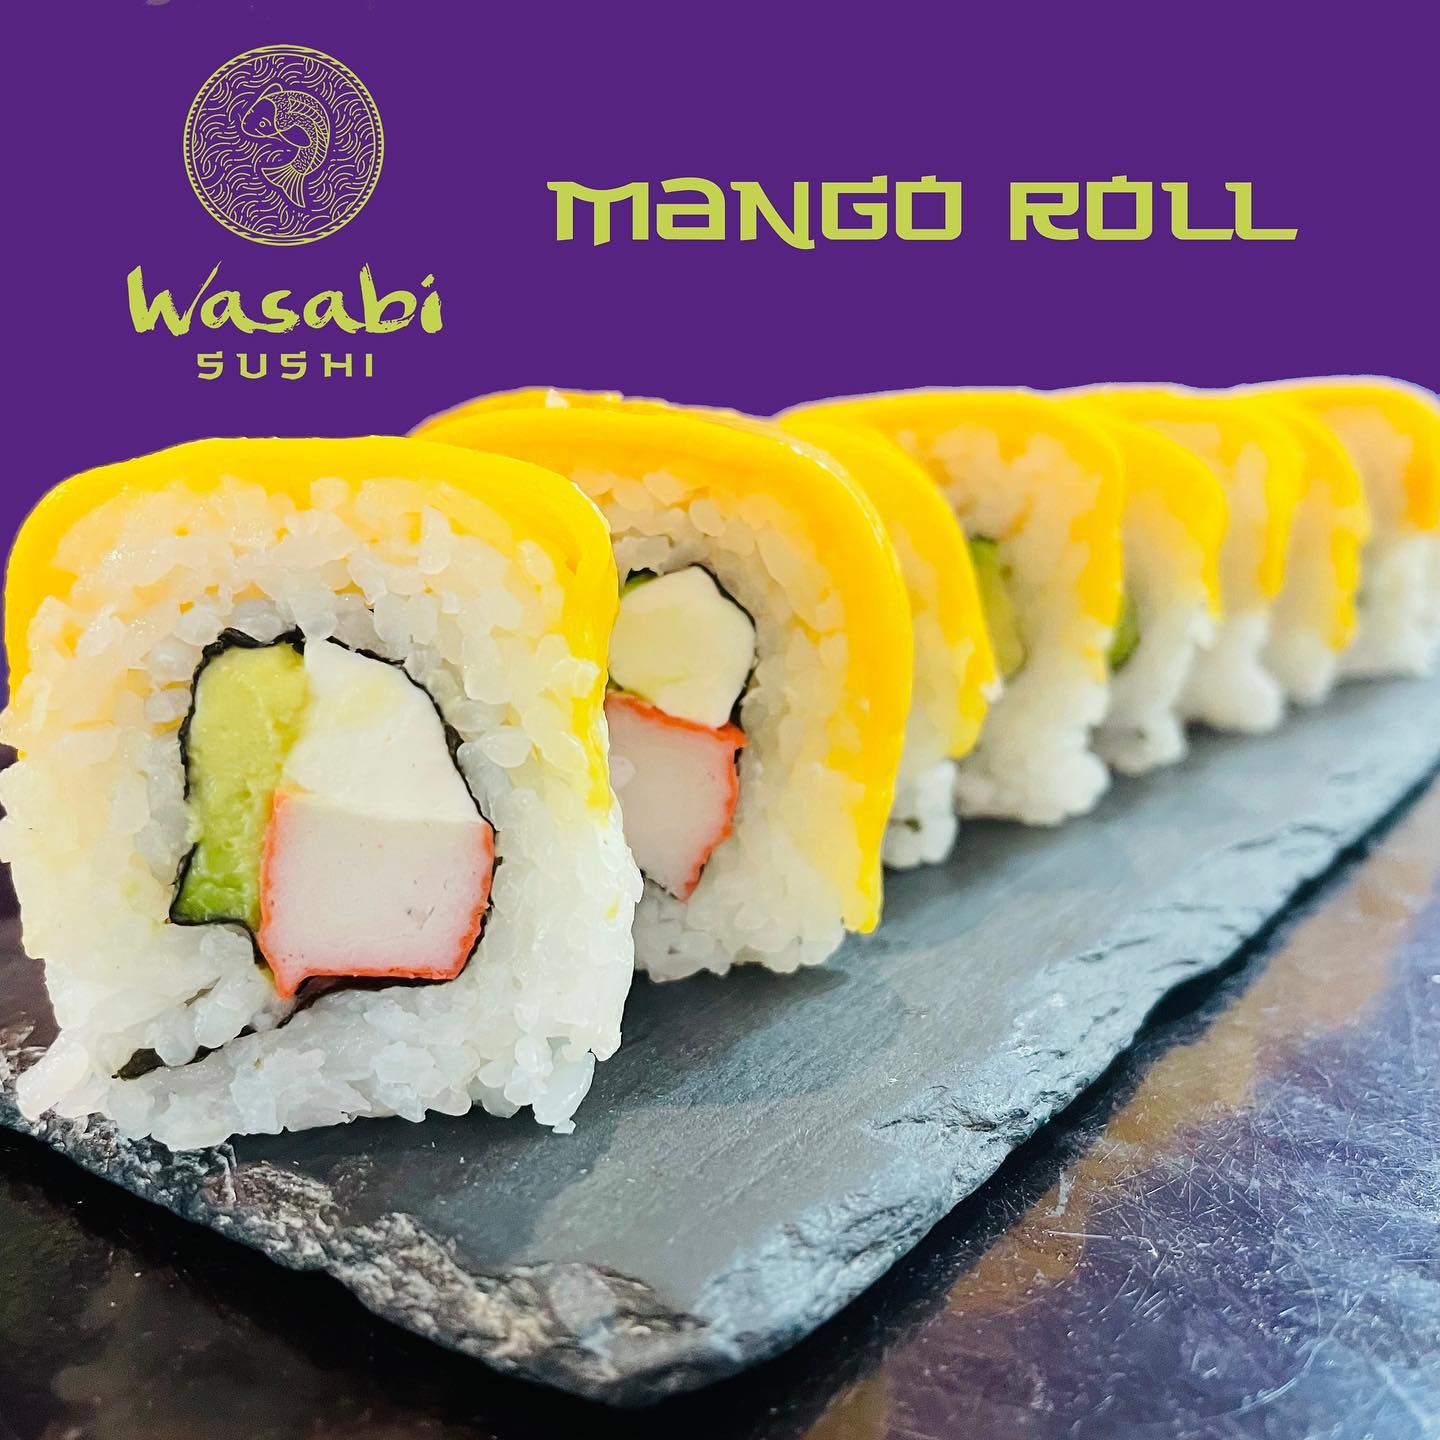 Wasabi Sushi - donde comer sushi en puebla